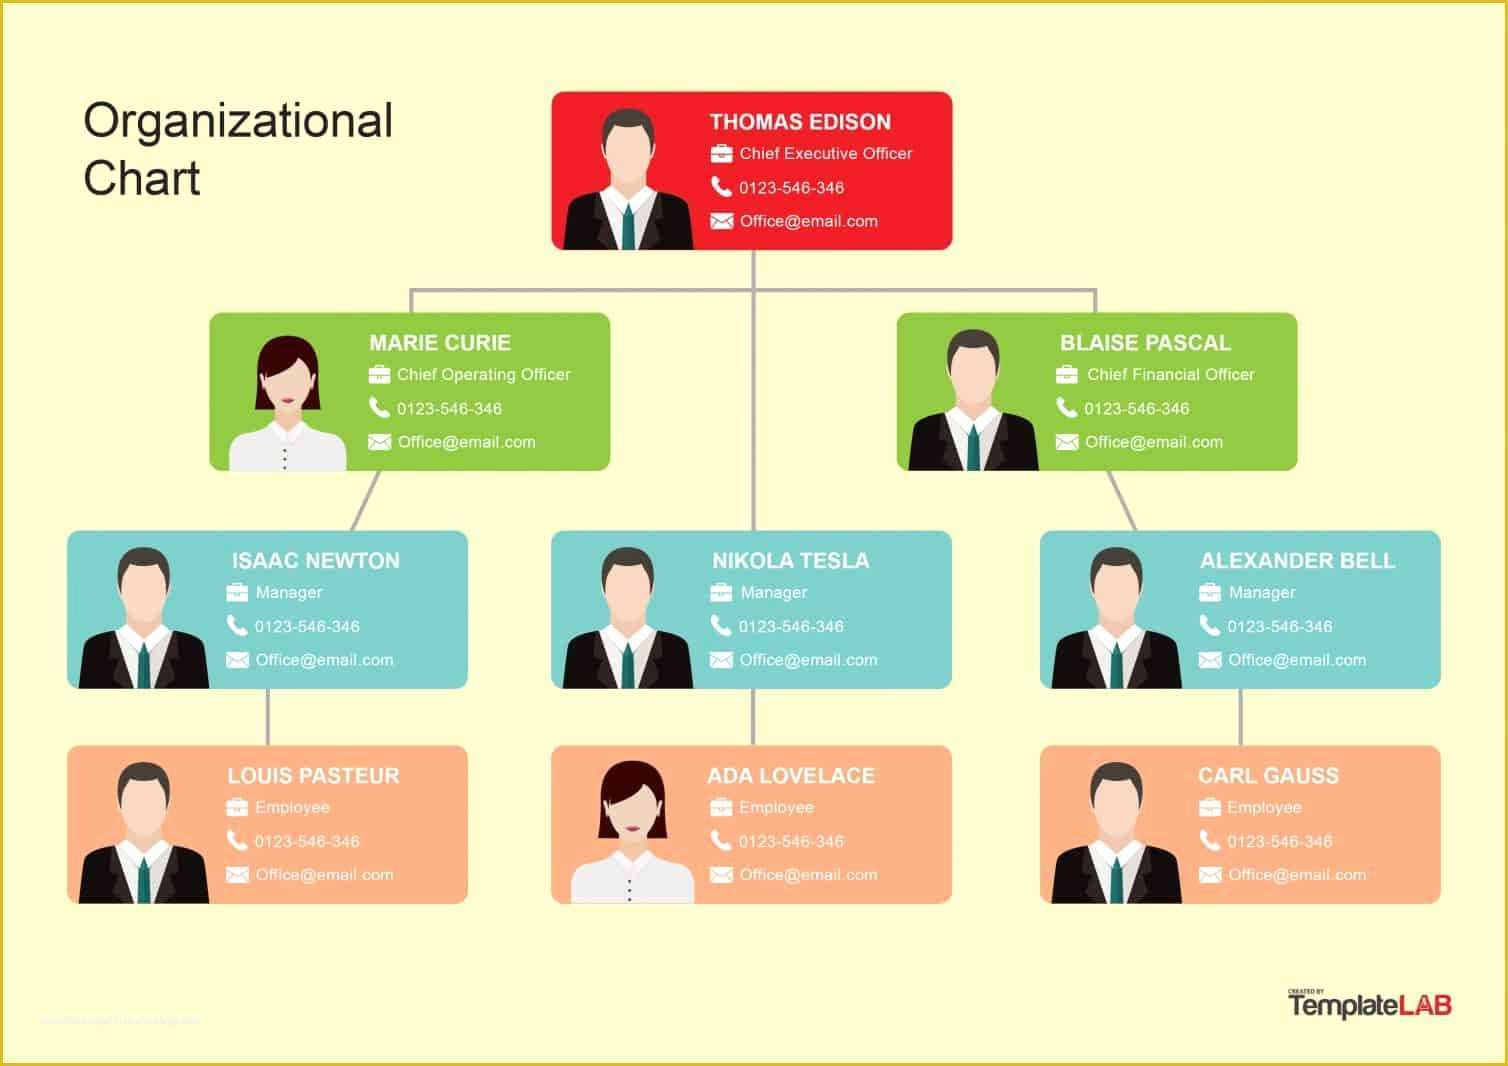 Organizational Flow Chart Template Free Of 40 organizational Chart Templates Word Excel Powerpoint